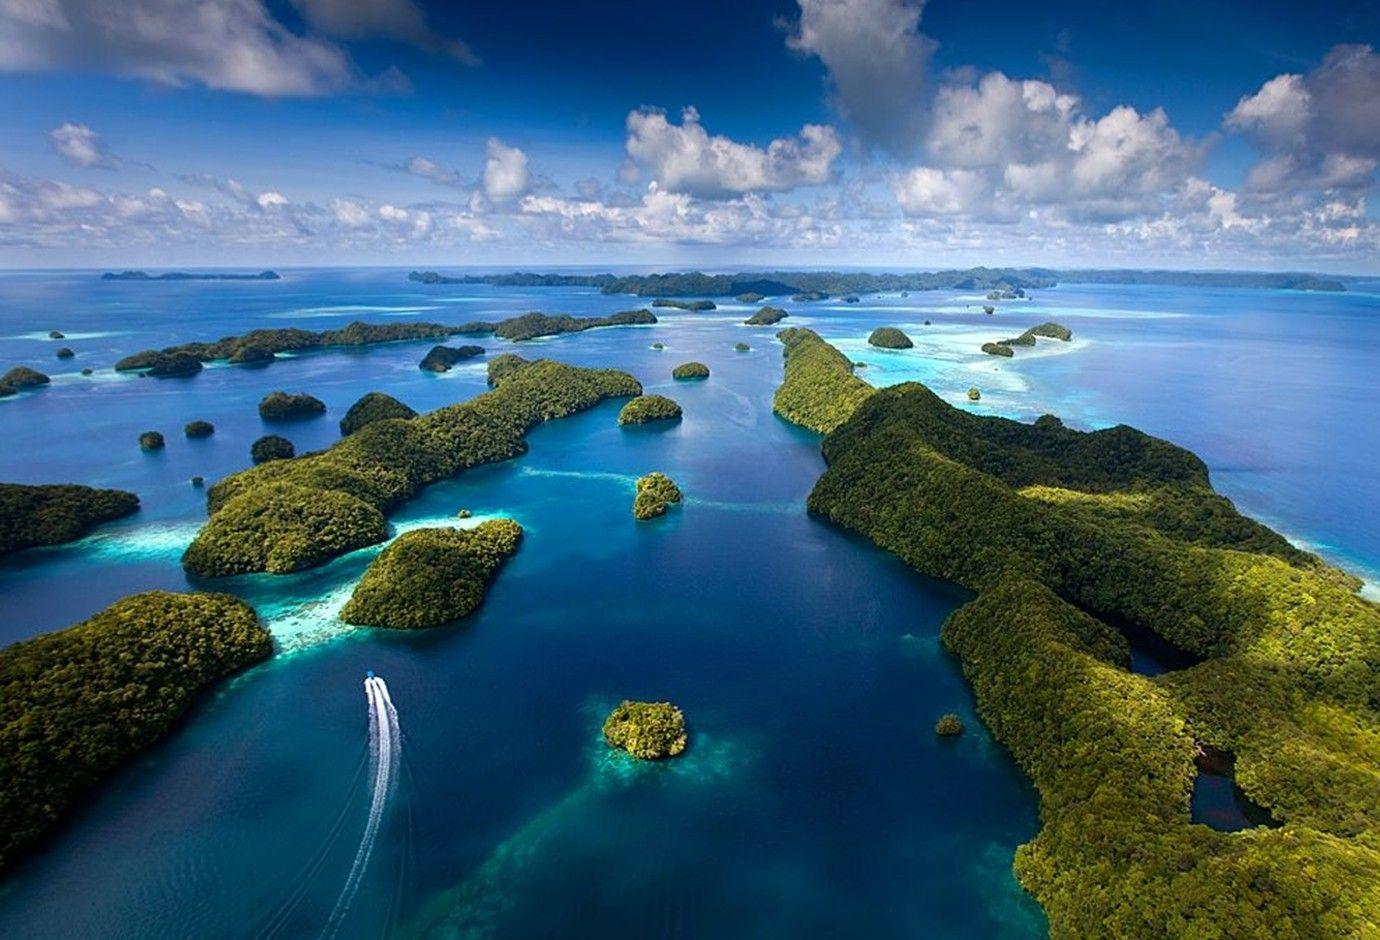 Palau Tag wallpaper: Palau Islands Ocean Reef Desktop Background